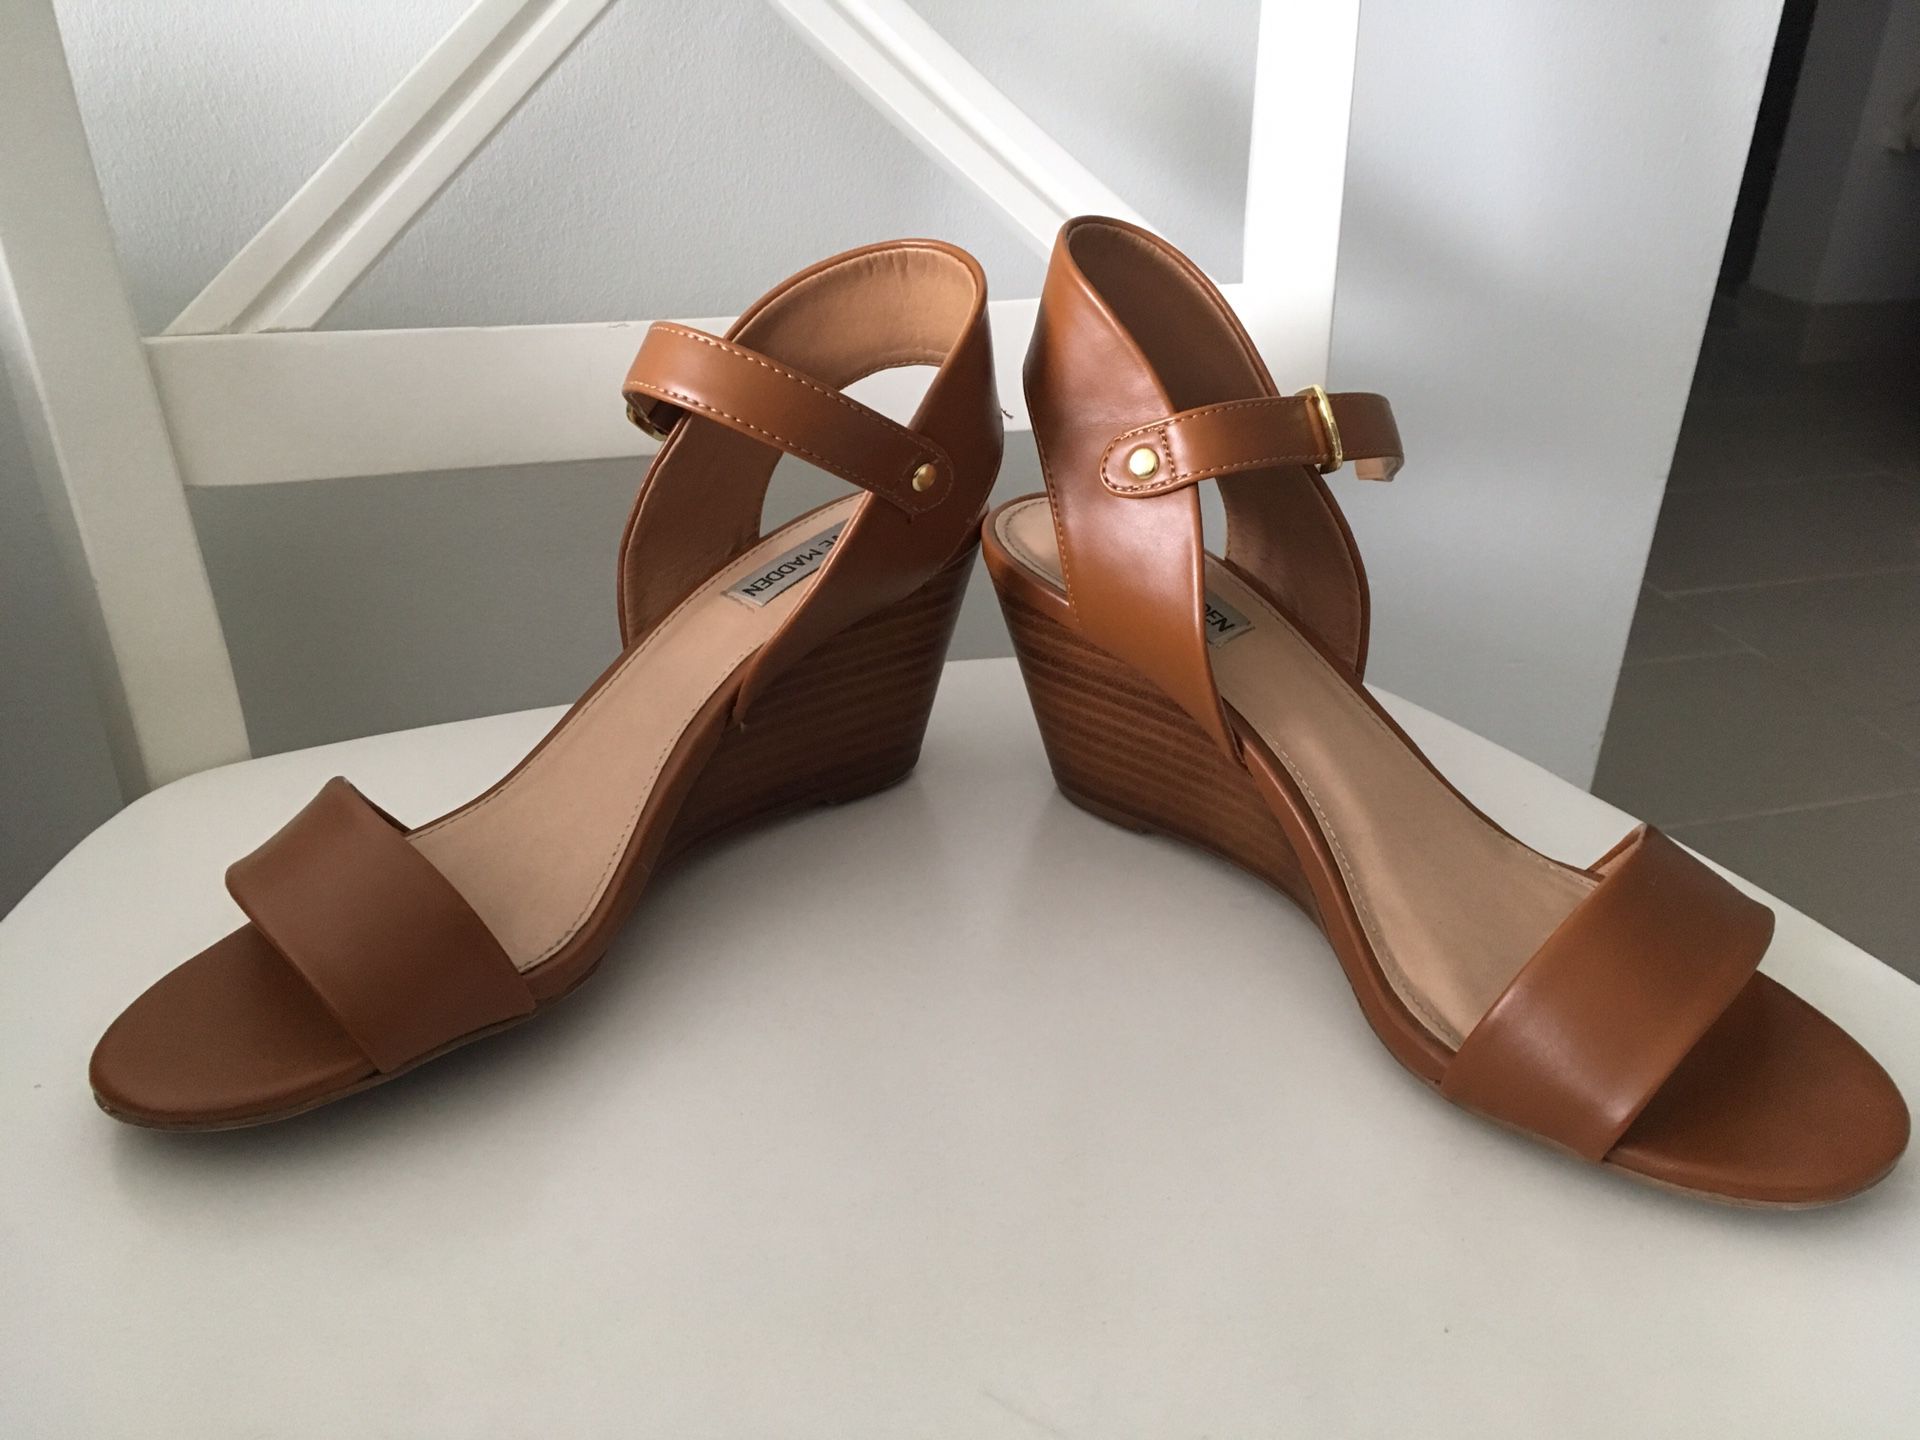 Steve Madden leather heels 8.5